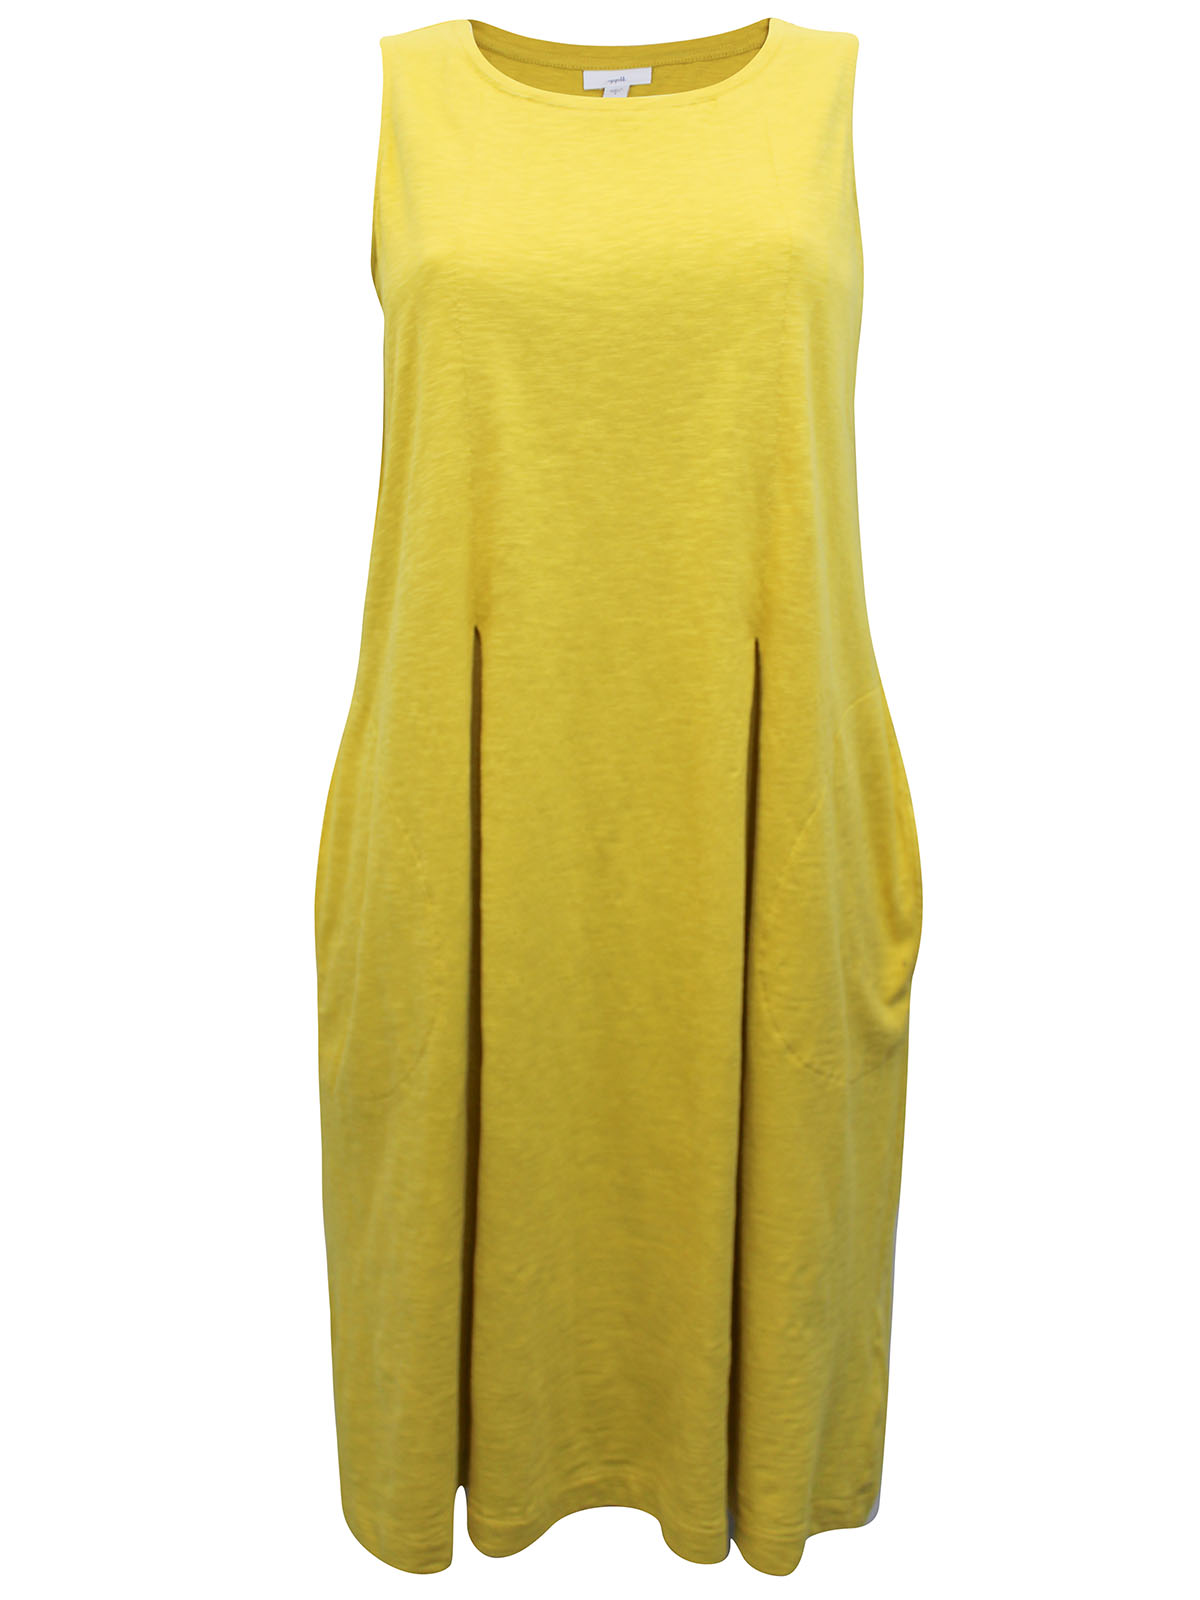 J.Jill - - J.Jill LEMON Pure Cotton Sleeveless Pocket Swing Dress - Plus  Size 4/6 to 28/30